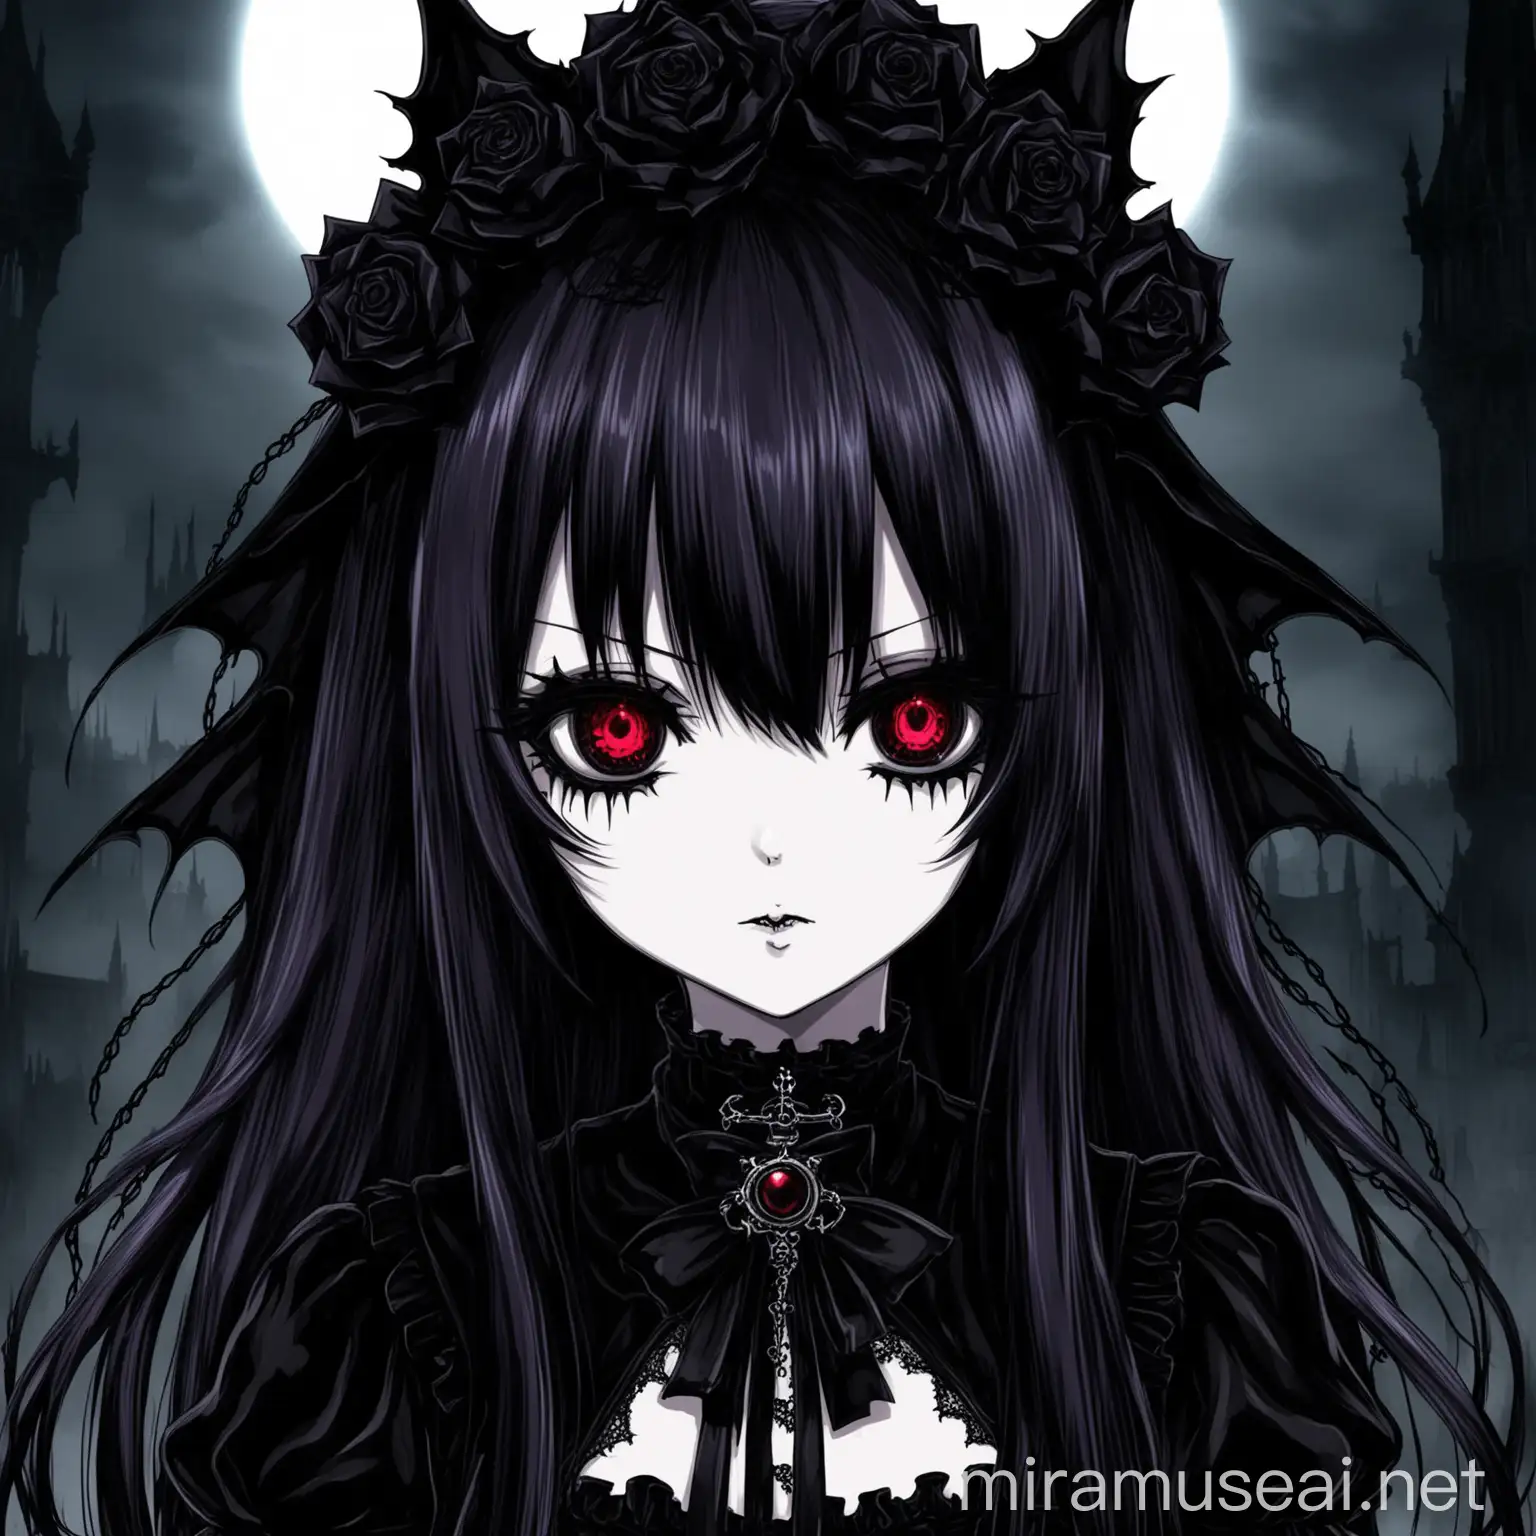 Dark Gothic Anime Girl with Mysterious Aura